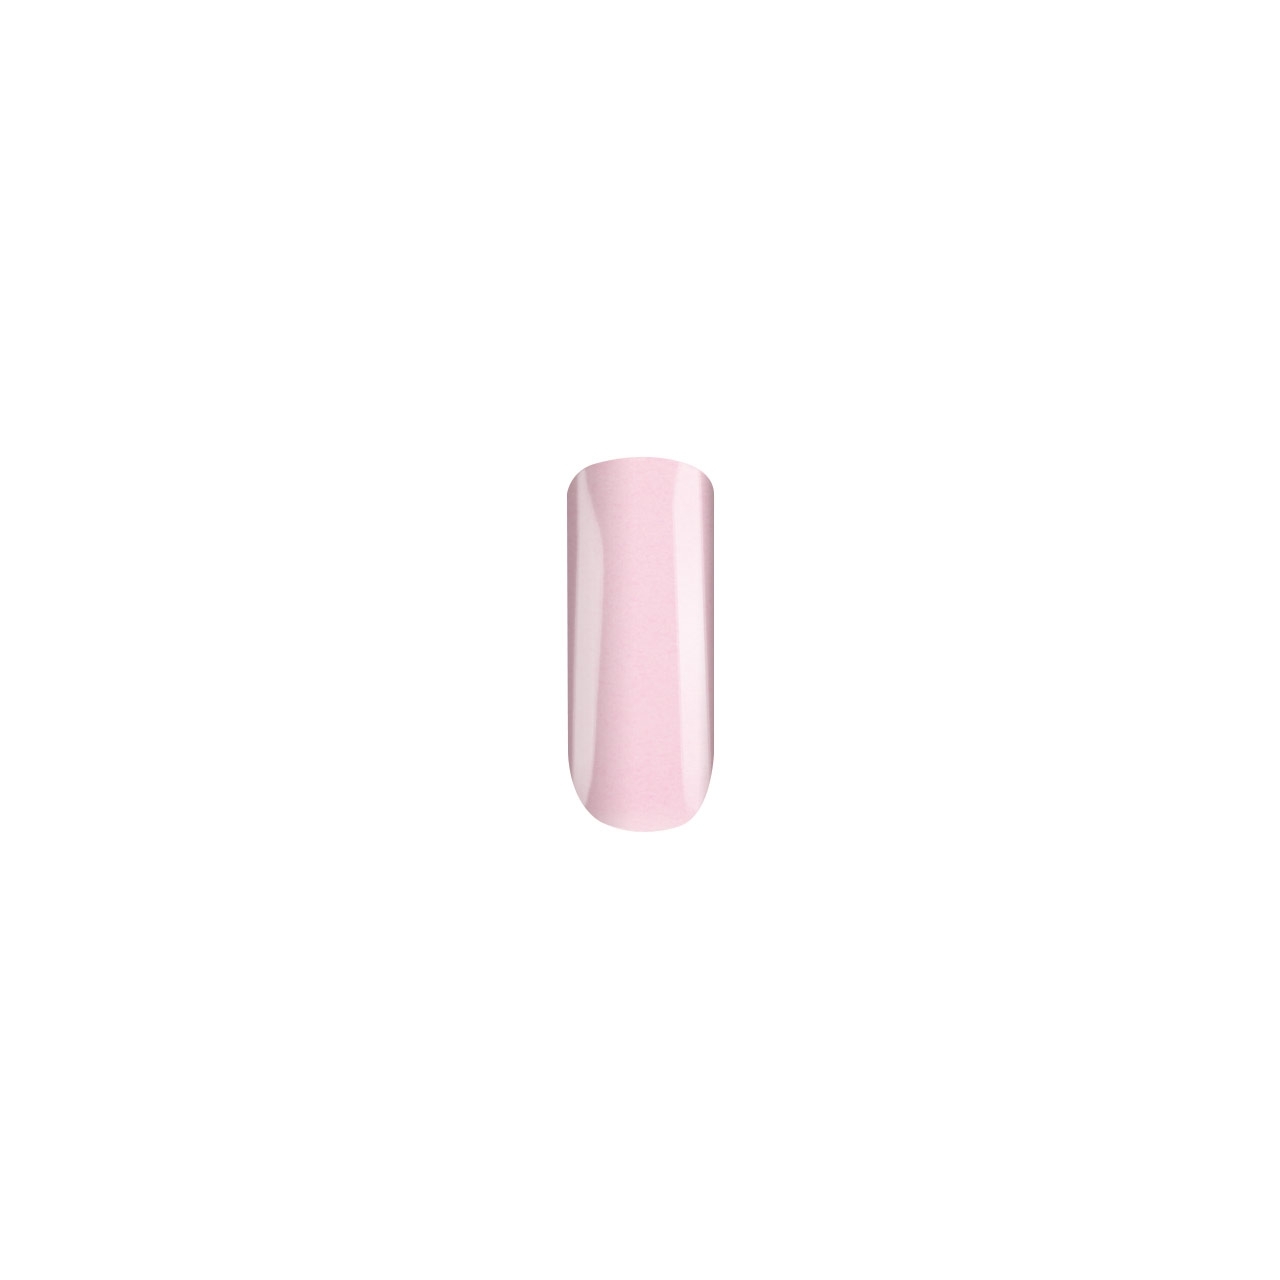 BAEHR BEAUTY CONCEPT - NAILS Nagellack light pink 11 ml